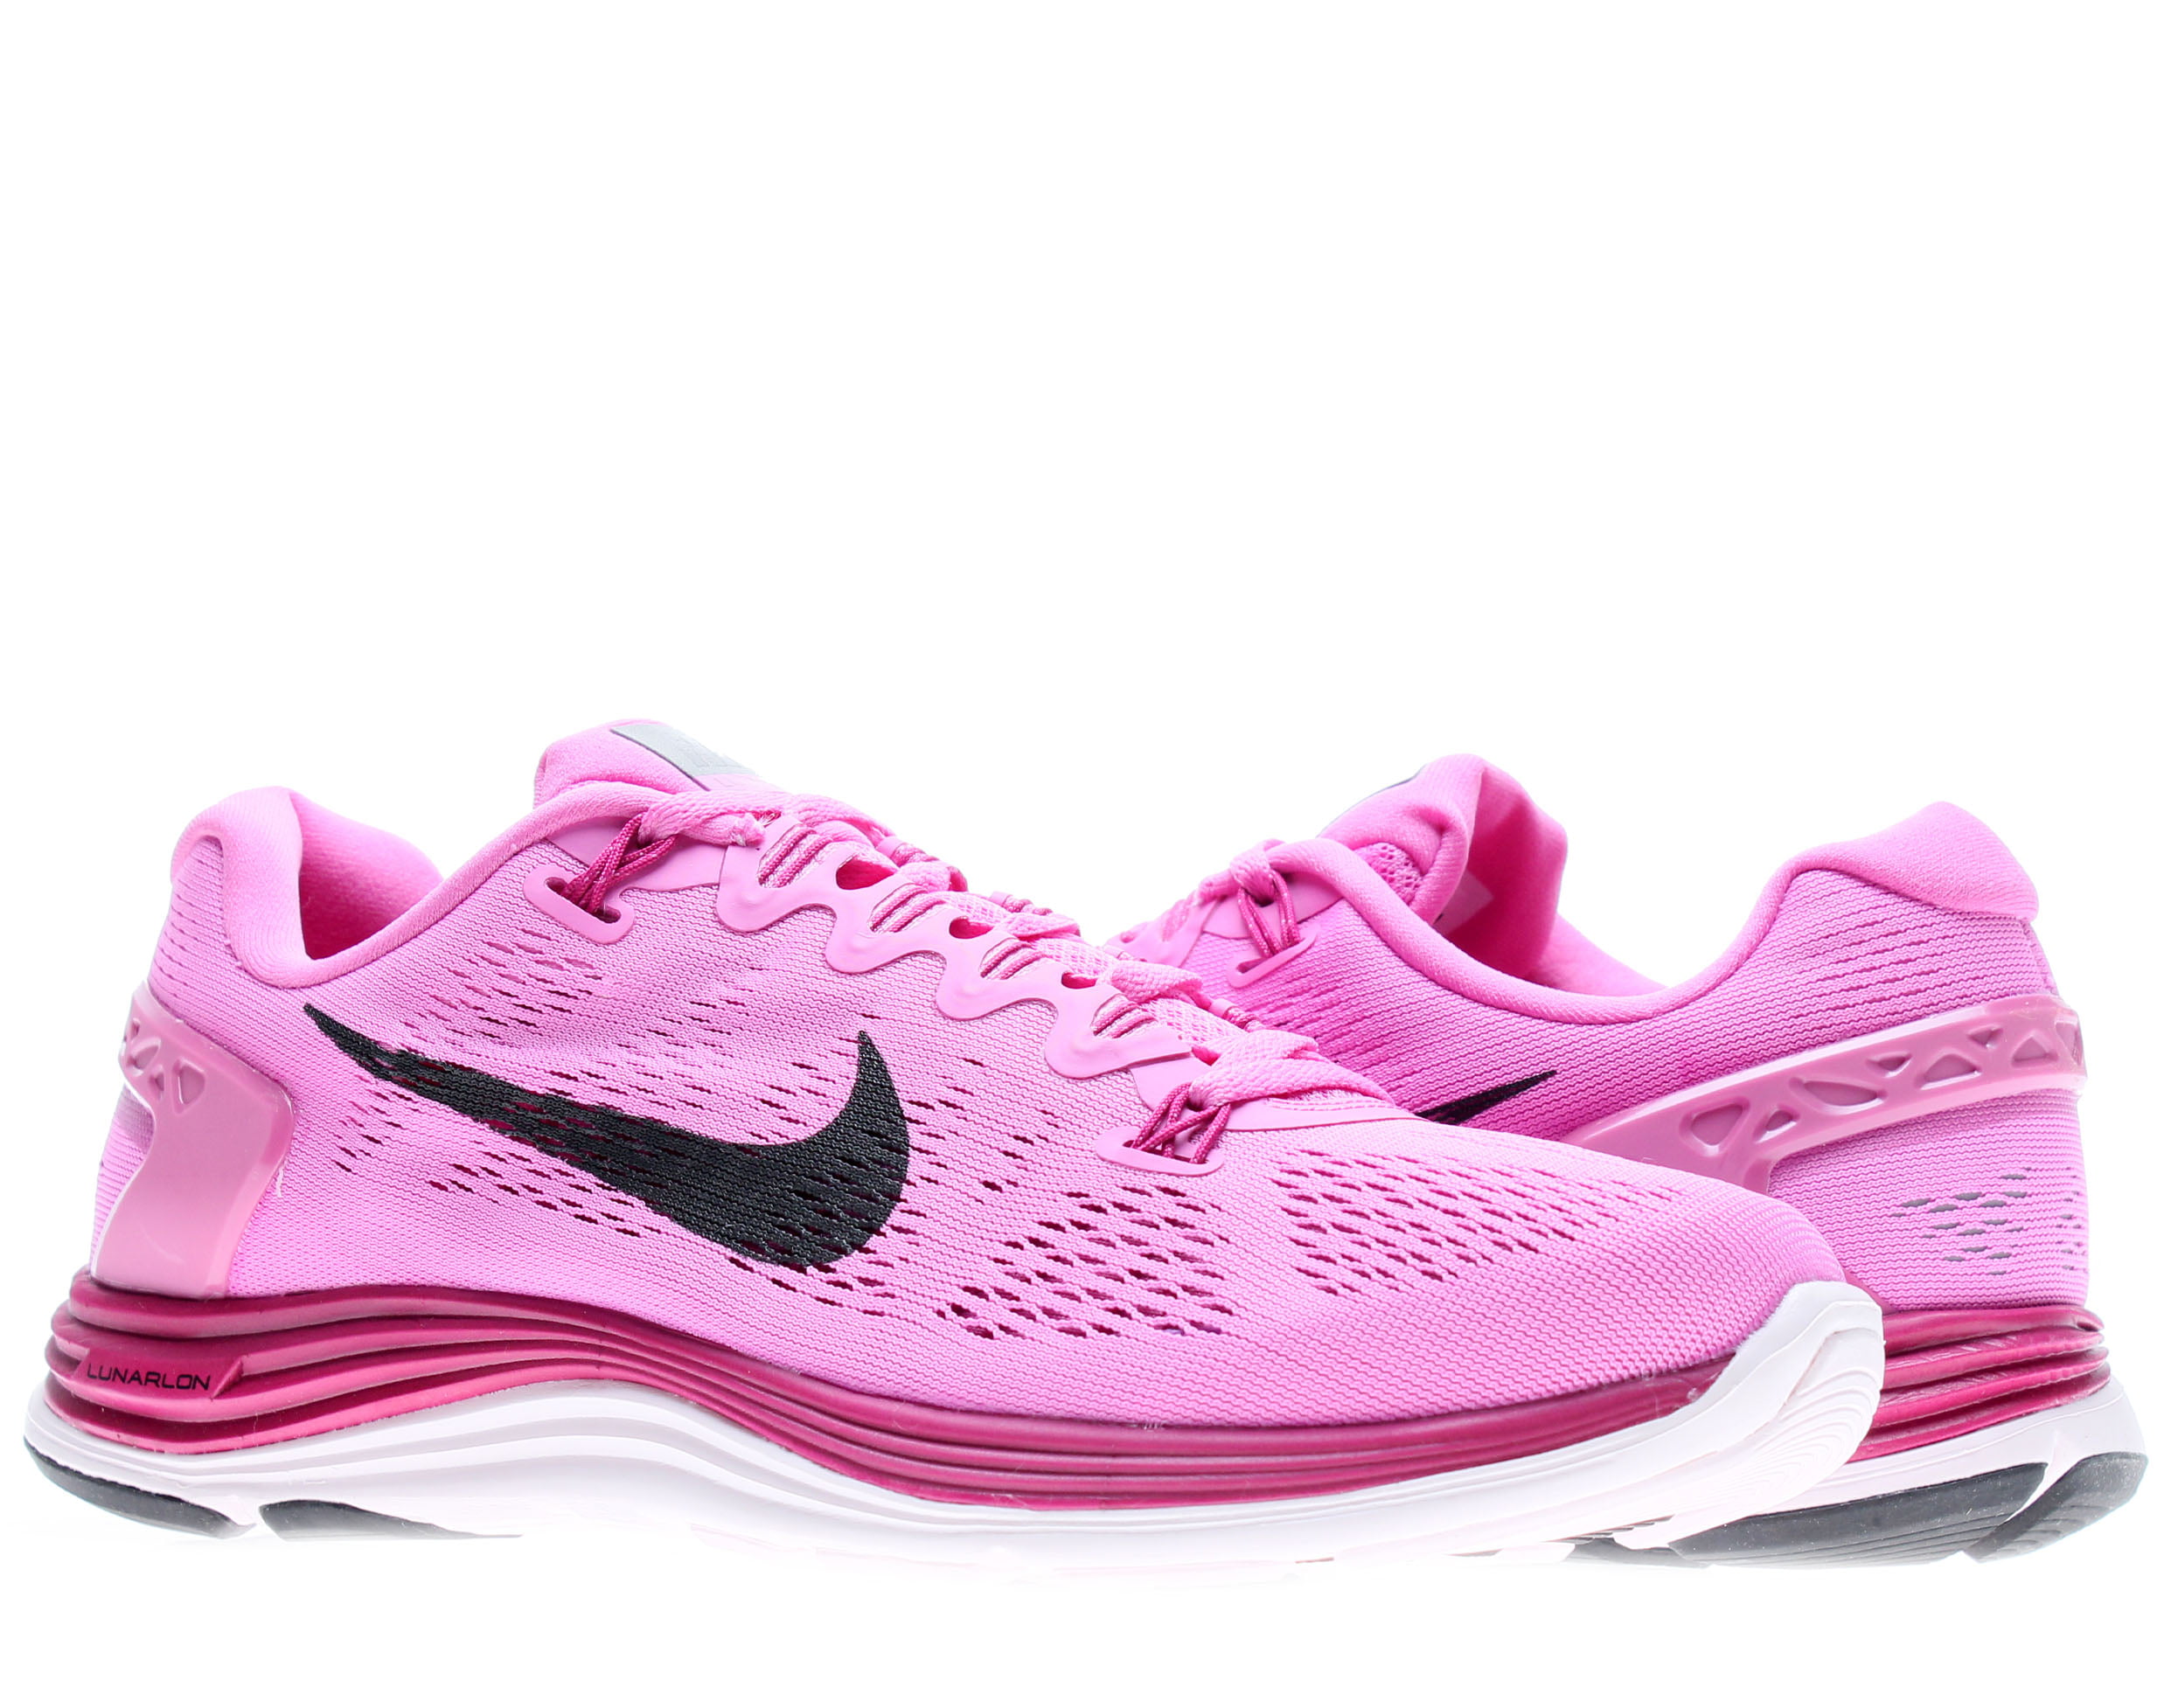 mirar televisión manejo haz Nike Lunarglide+ 5 Women's Running Shoes Size 8.5 - Walmart.com